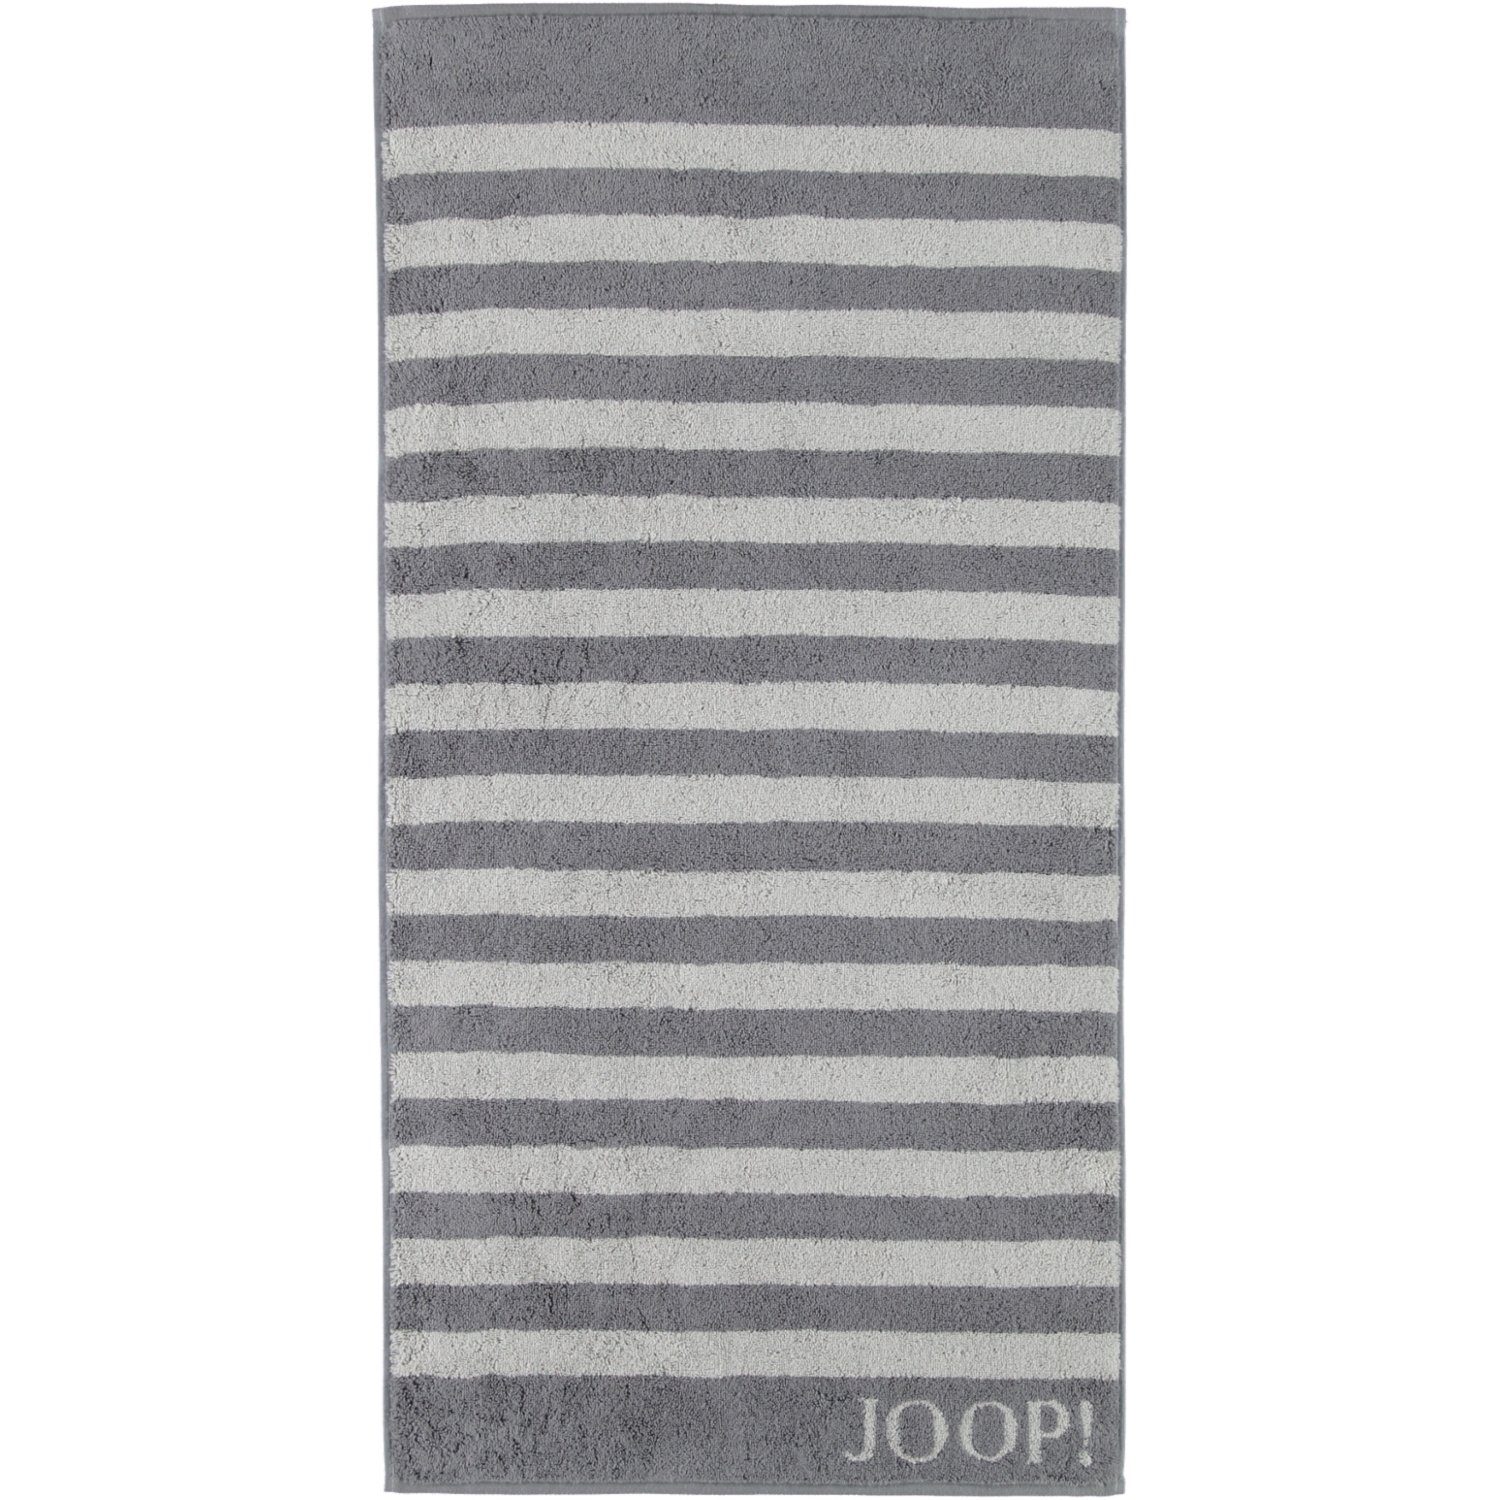 (77) Handtücher 100% Stripes Joop! 1610, Classic Anthrazit Baumwolle